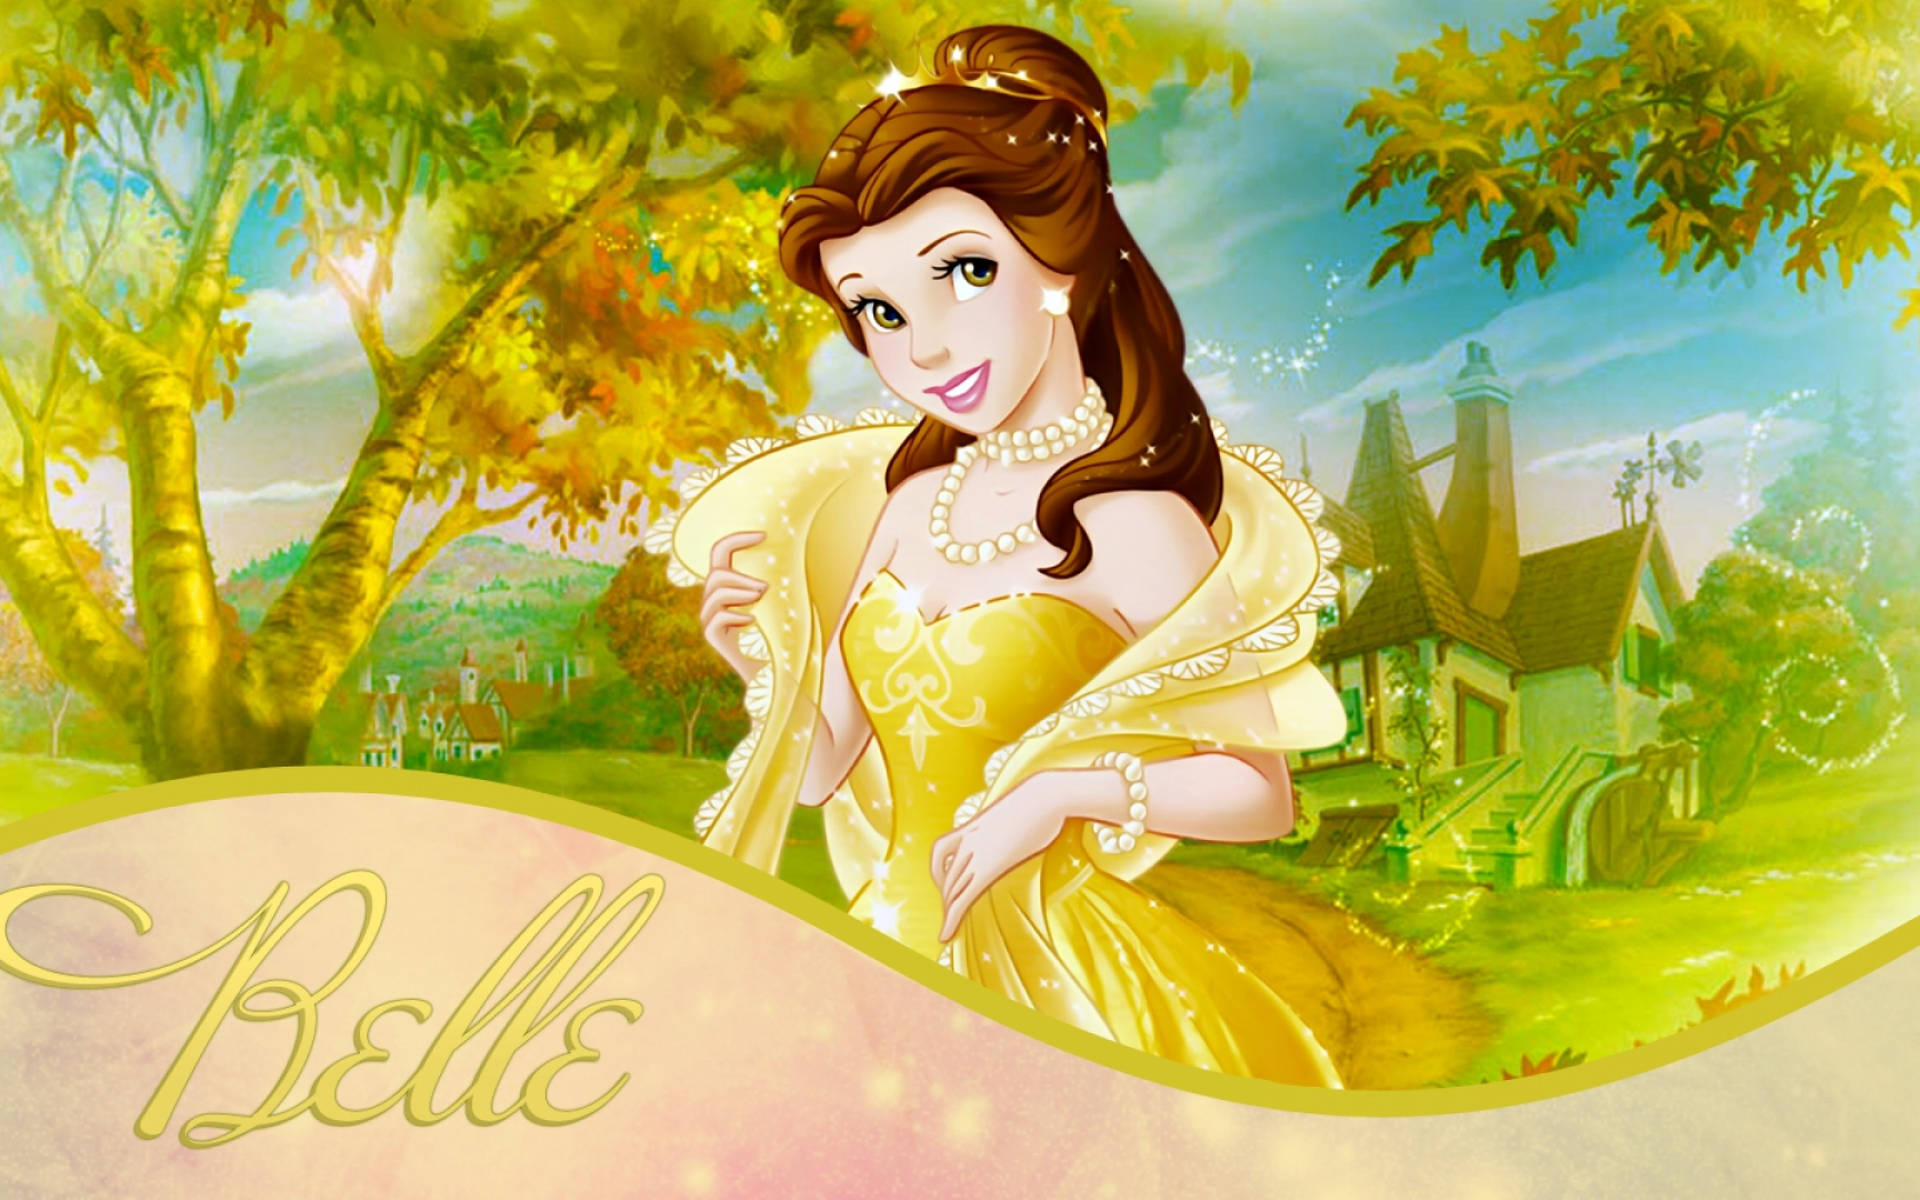 Belle Background Photos